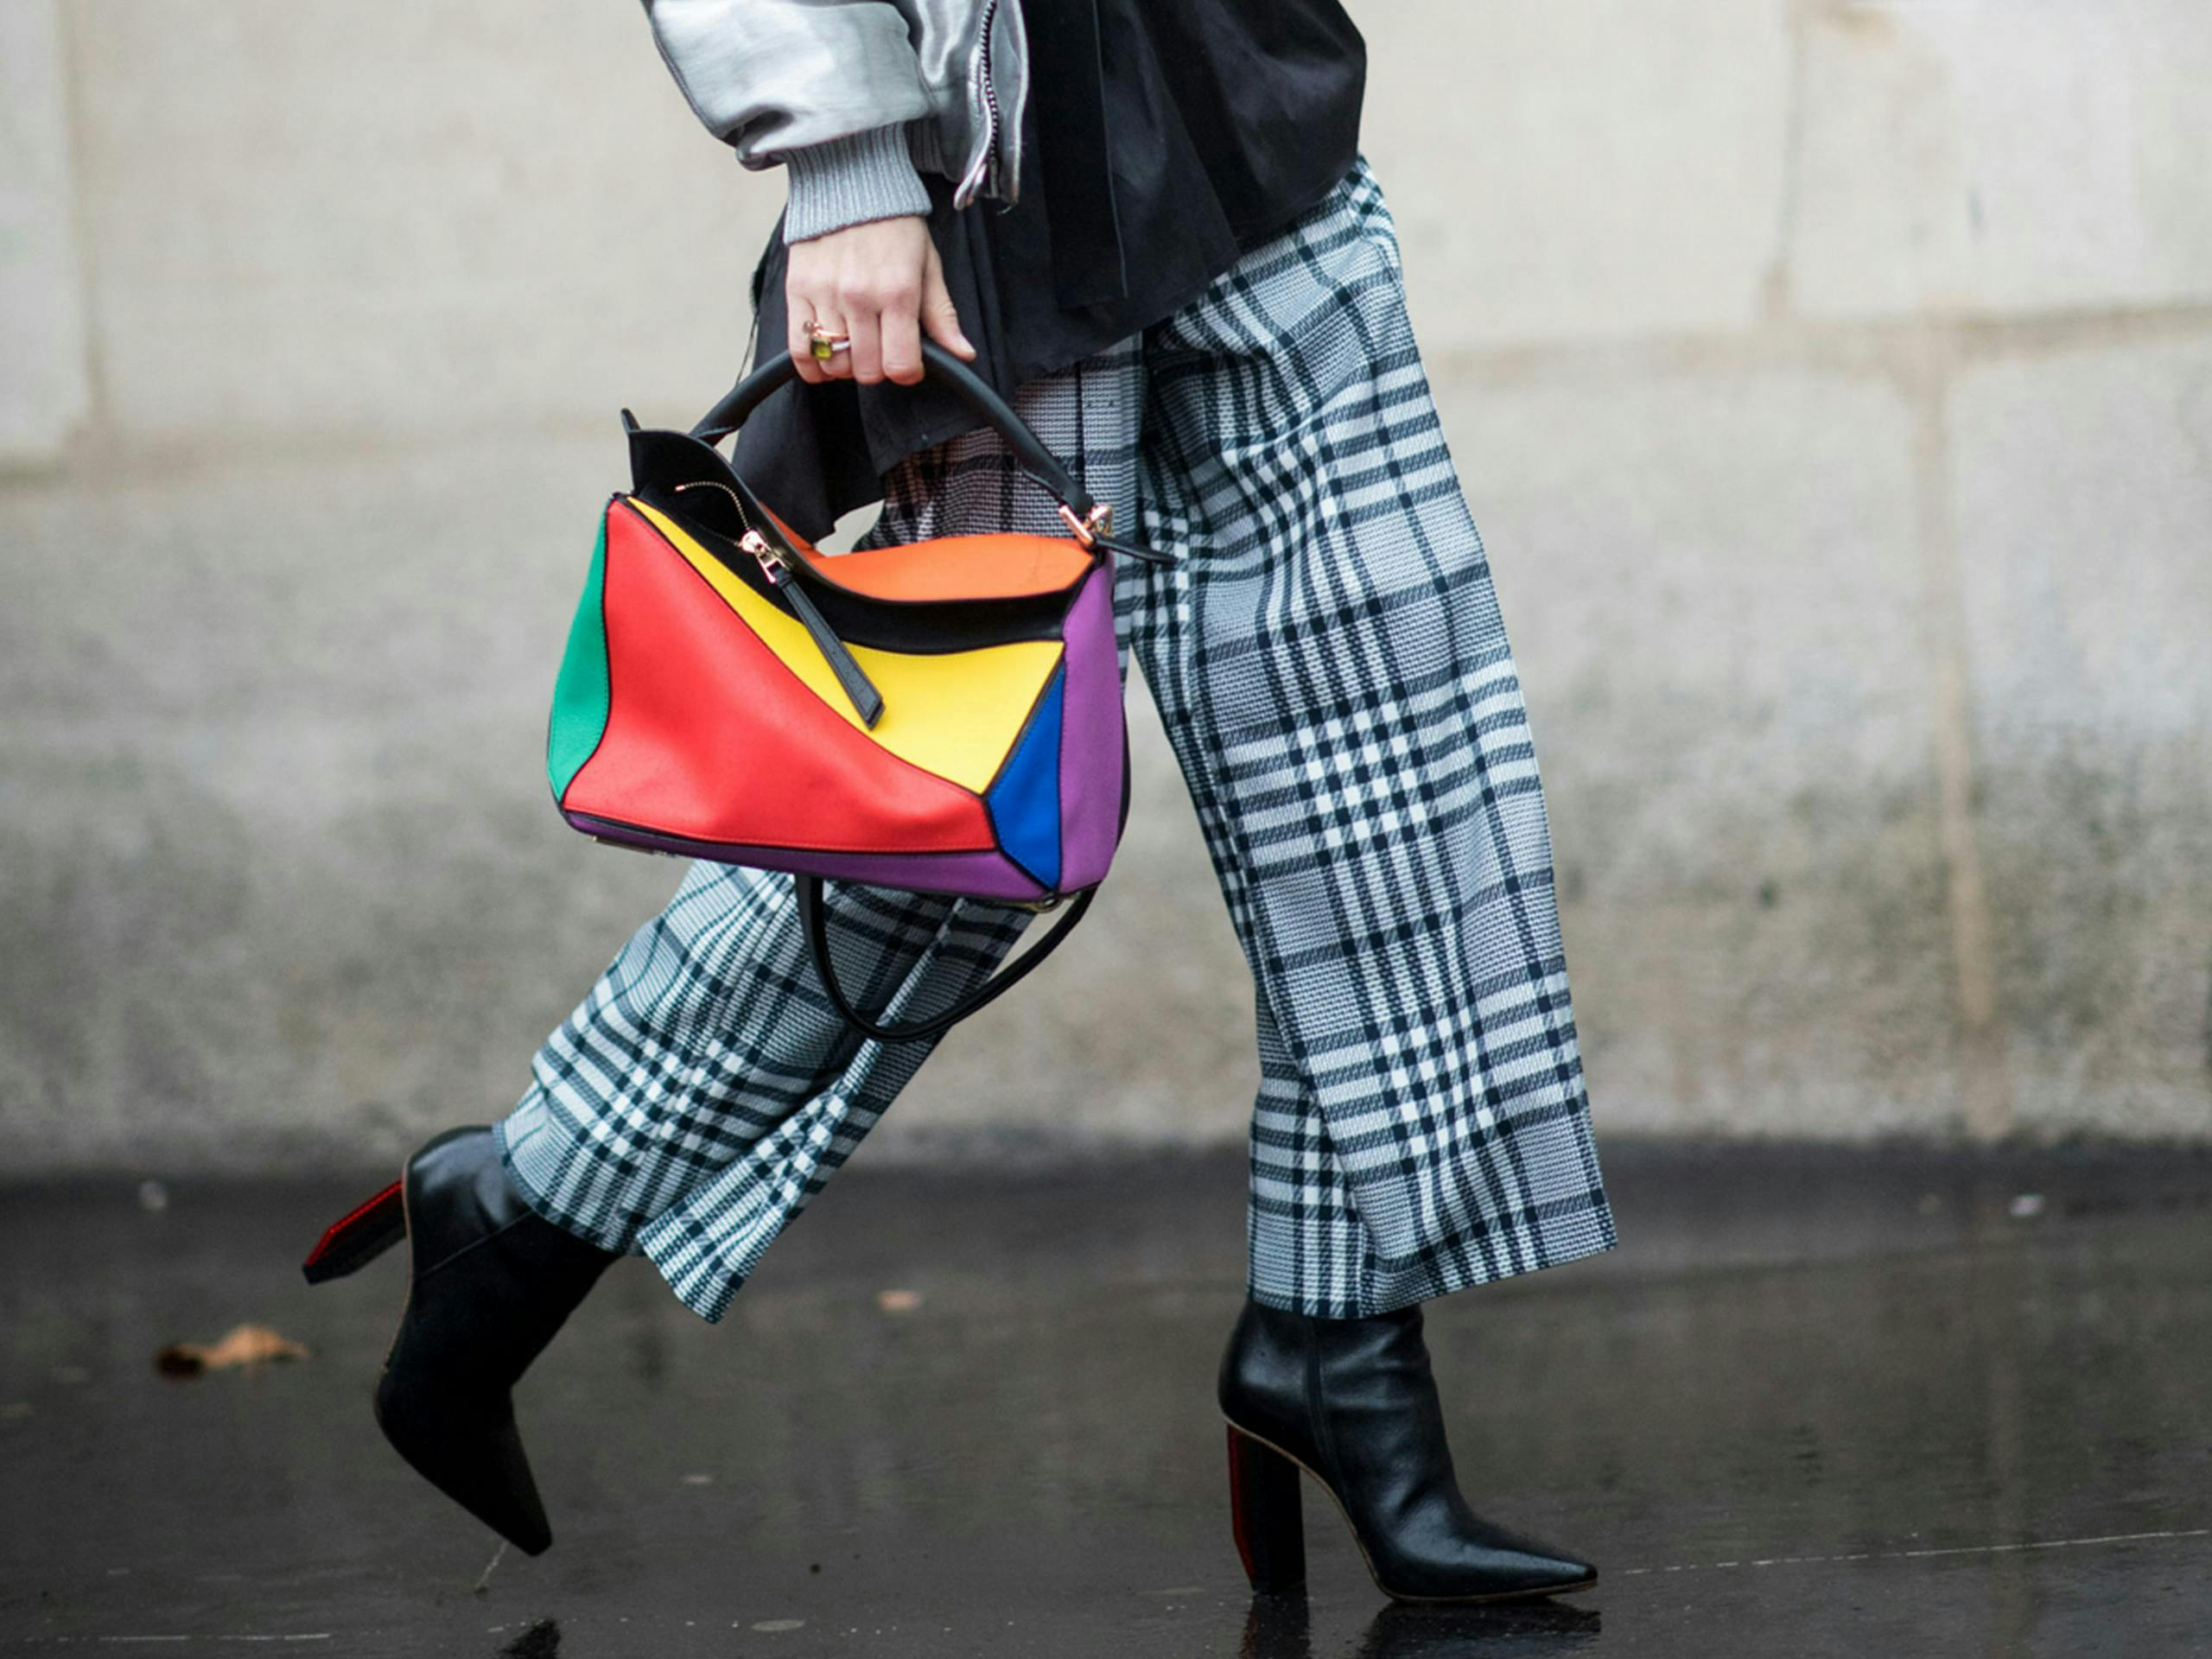 clothing apparel person human footwear handbag accessories bag shoe purse